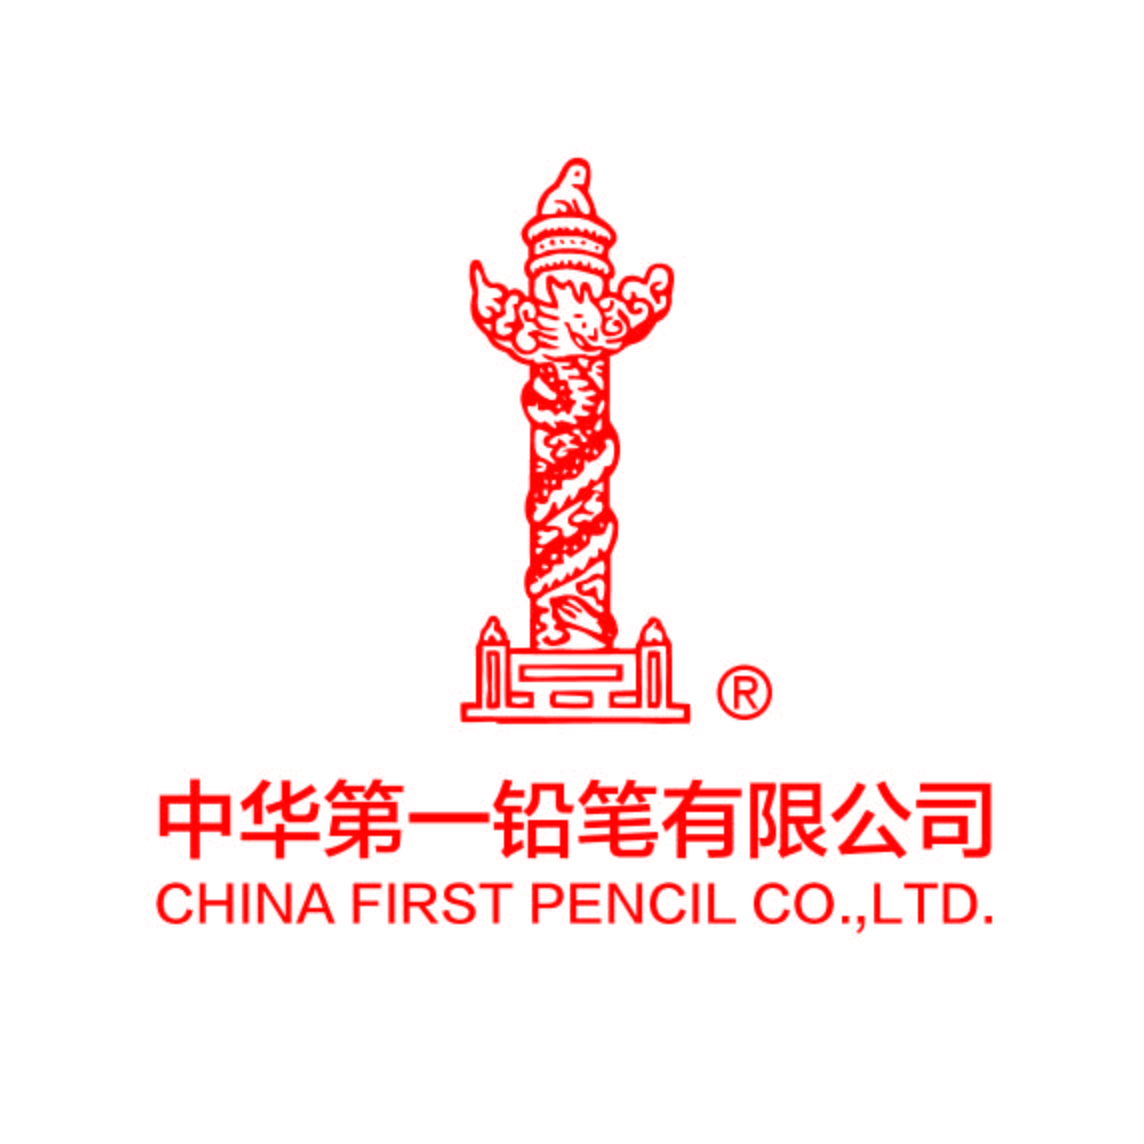 CHINA FIRST PENCIL CO., LTD.